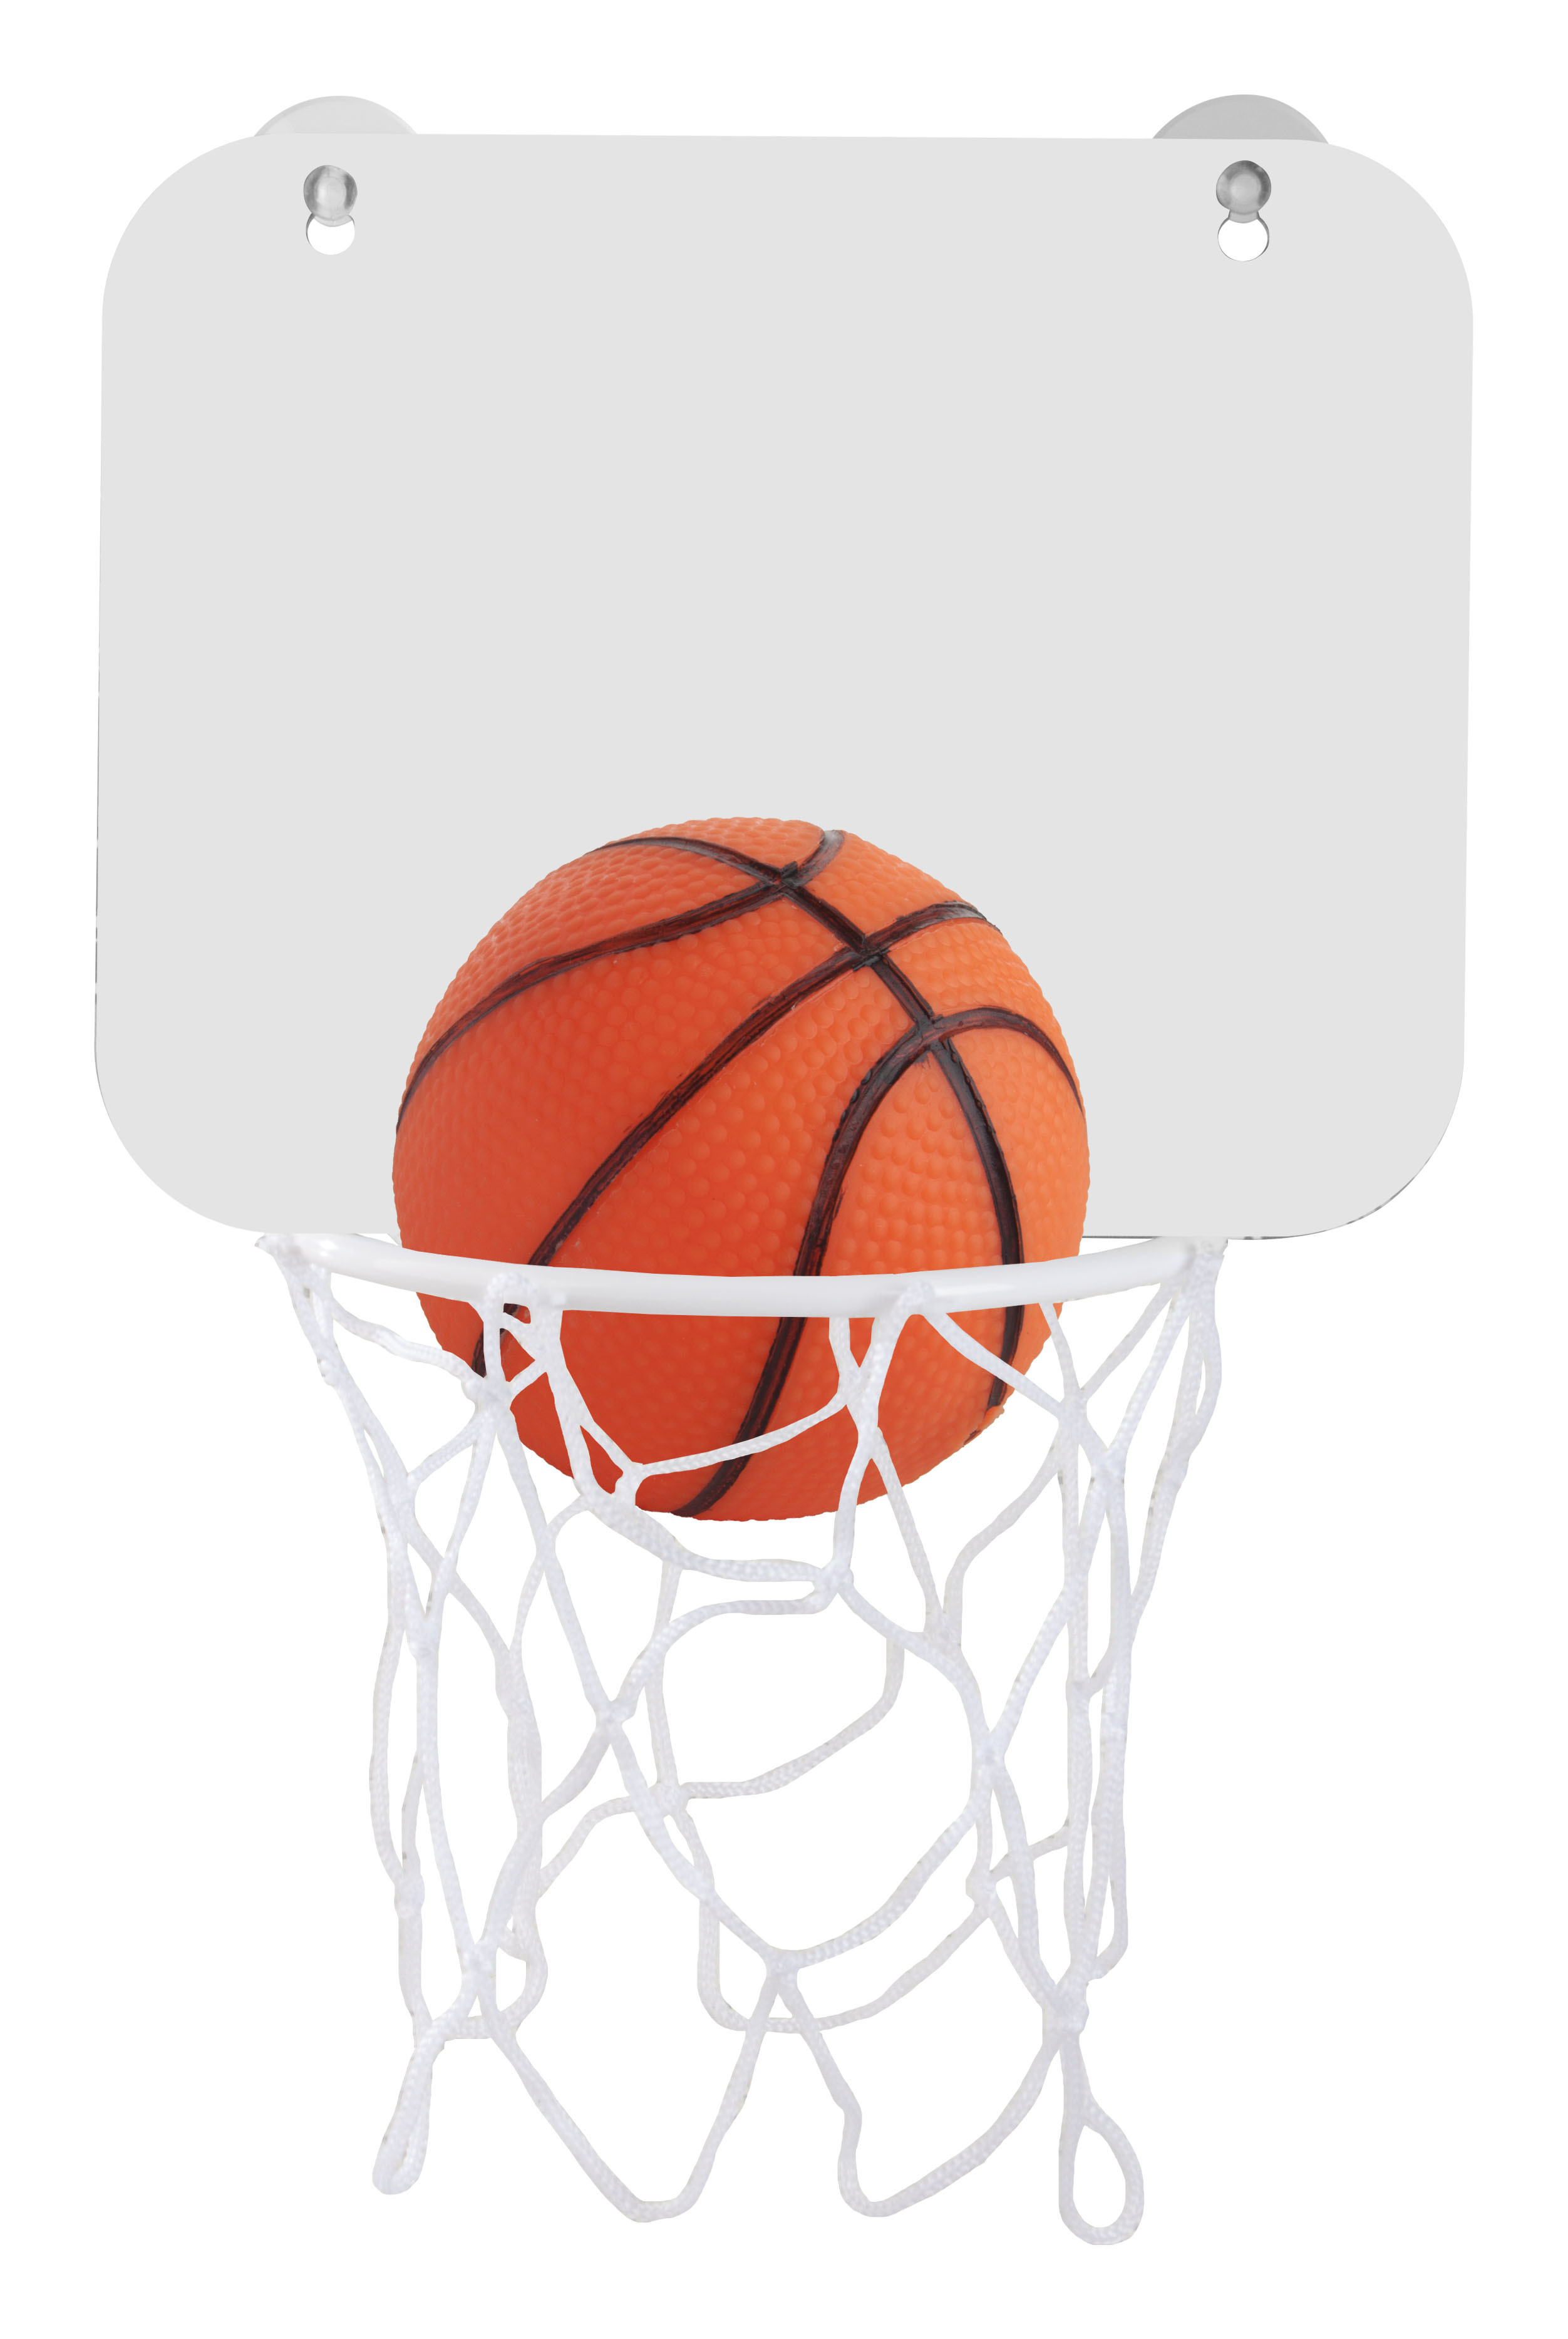 Panier et ballon de basket - Ballon de basket personnalisé